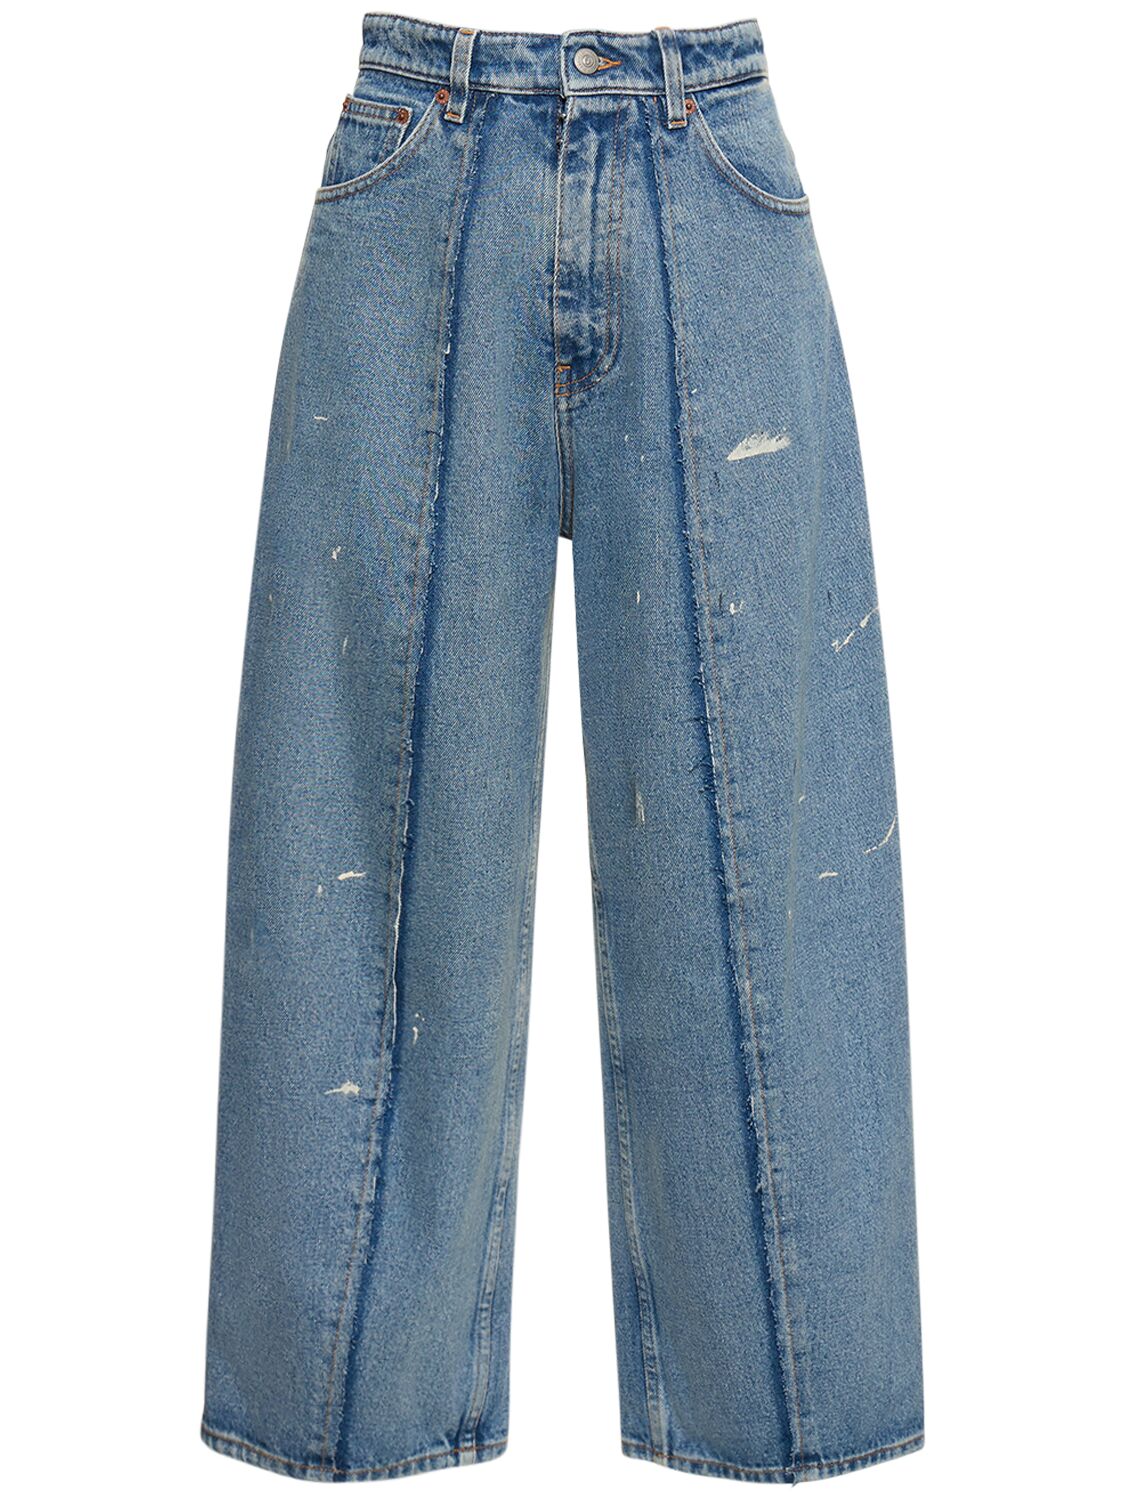 Mujer Jeans Anchos De Algodón 30 - MM6 MAISON MARGIELA - Modalova